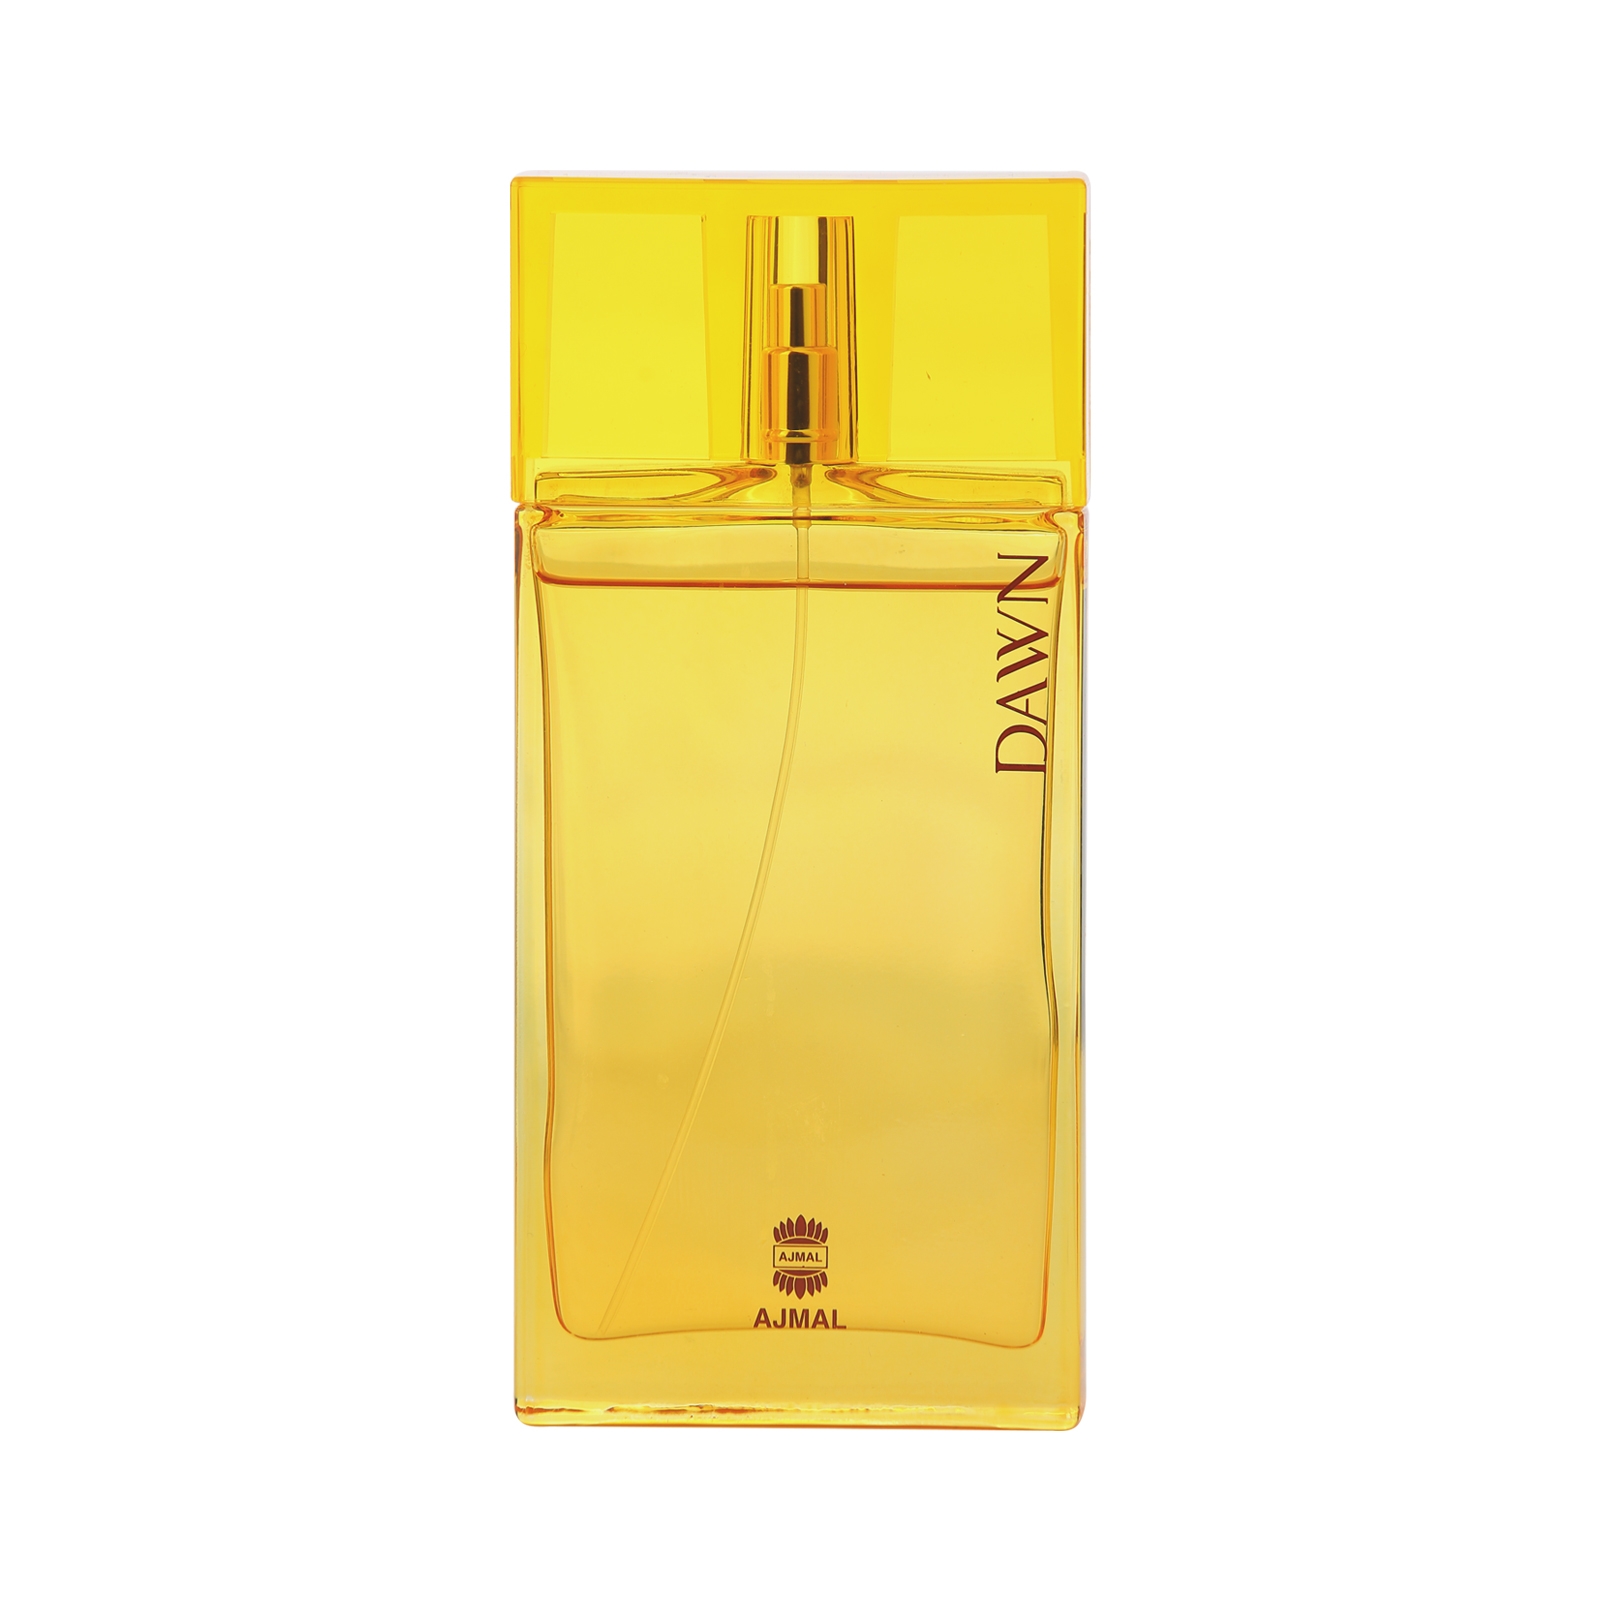 Ajmal | AJMAL DAWN Perfume EDP Gift for Men Women 90ML Long Last Scent Spray Online Exclusive Made in Dubai +2 Testers